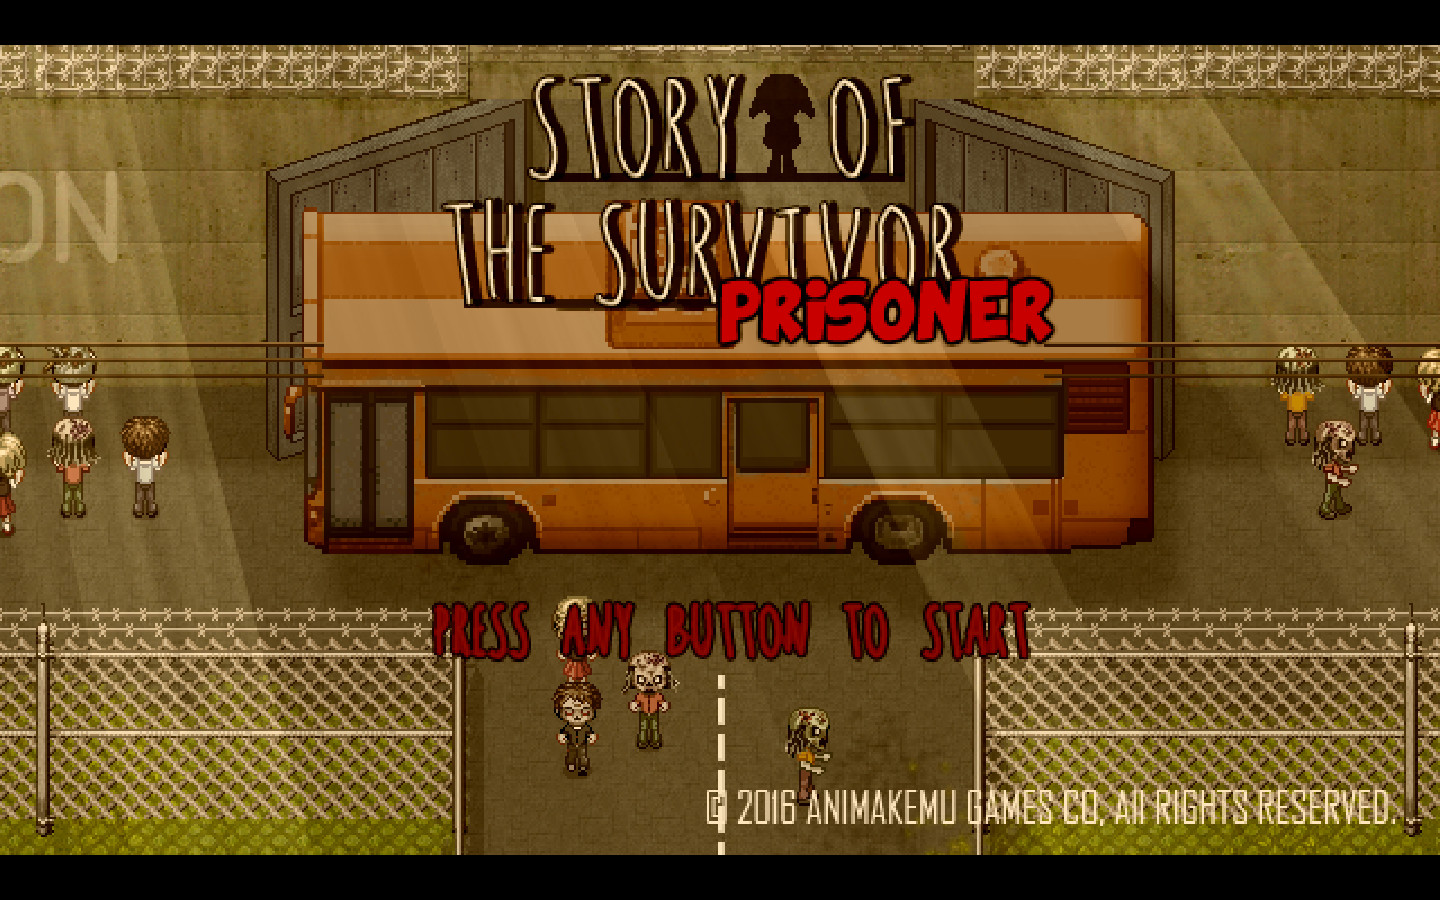 Story of the Survivor: Prisoner Steam CD Key 0.55 $